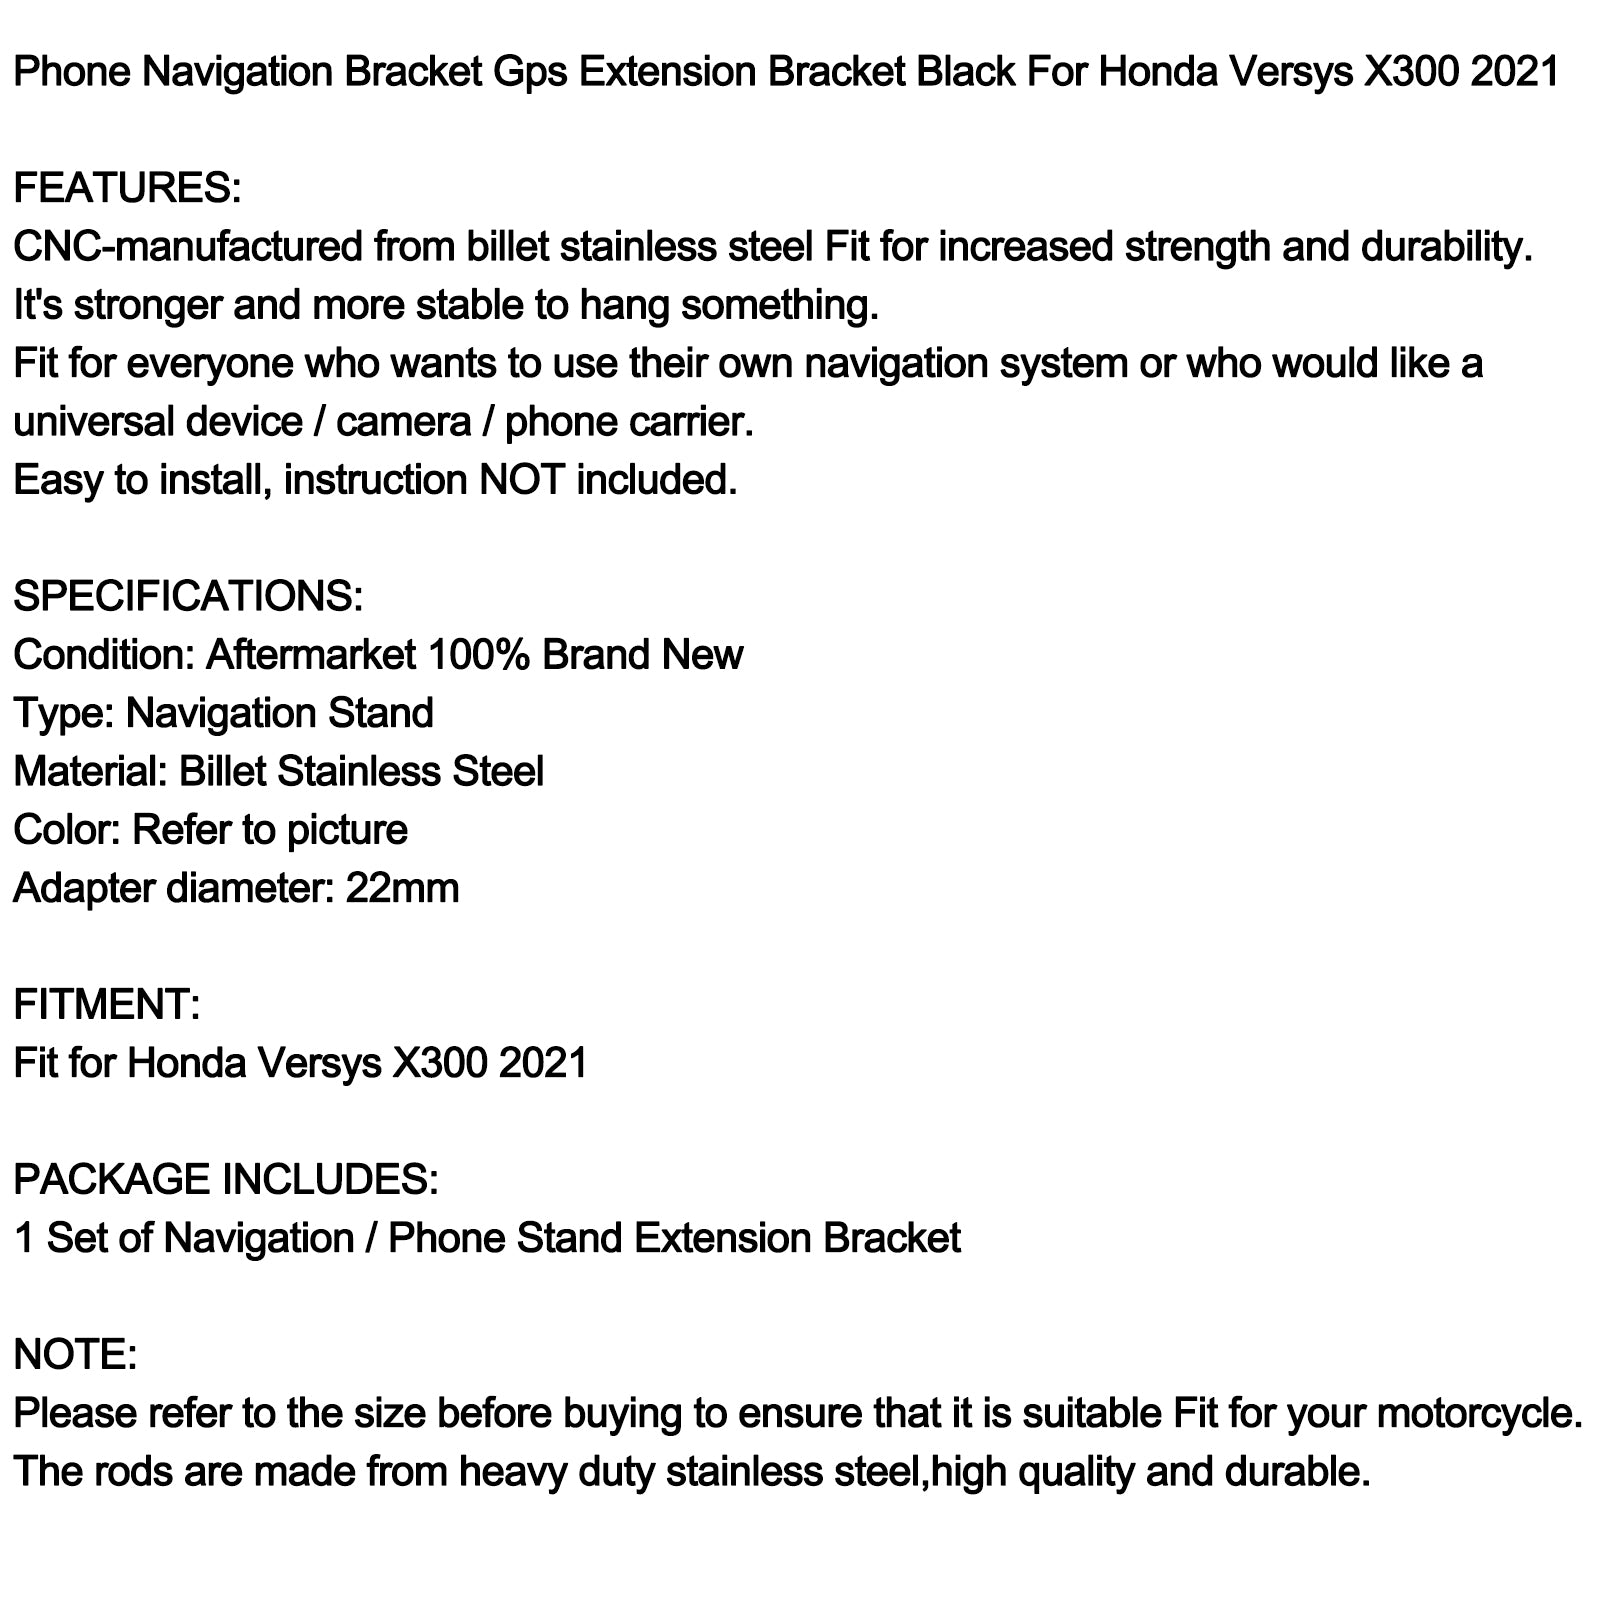 Navigation Bracket Phone Gps Bracket Black Fits For Bmw Honda Versys X300 2021 Generic